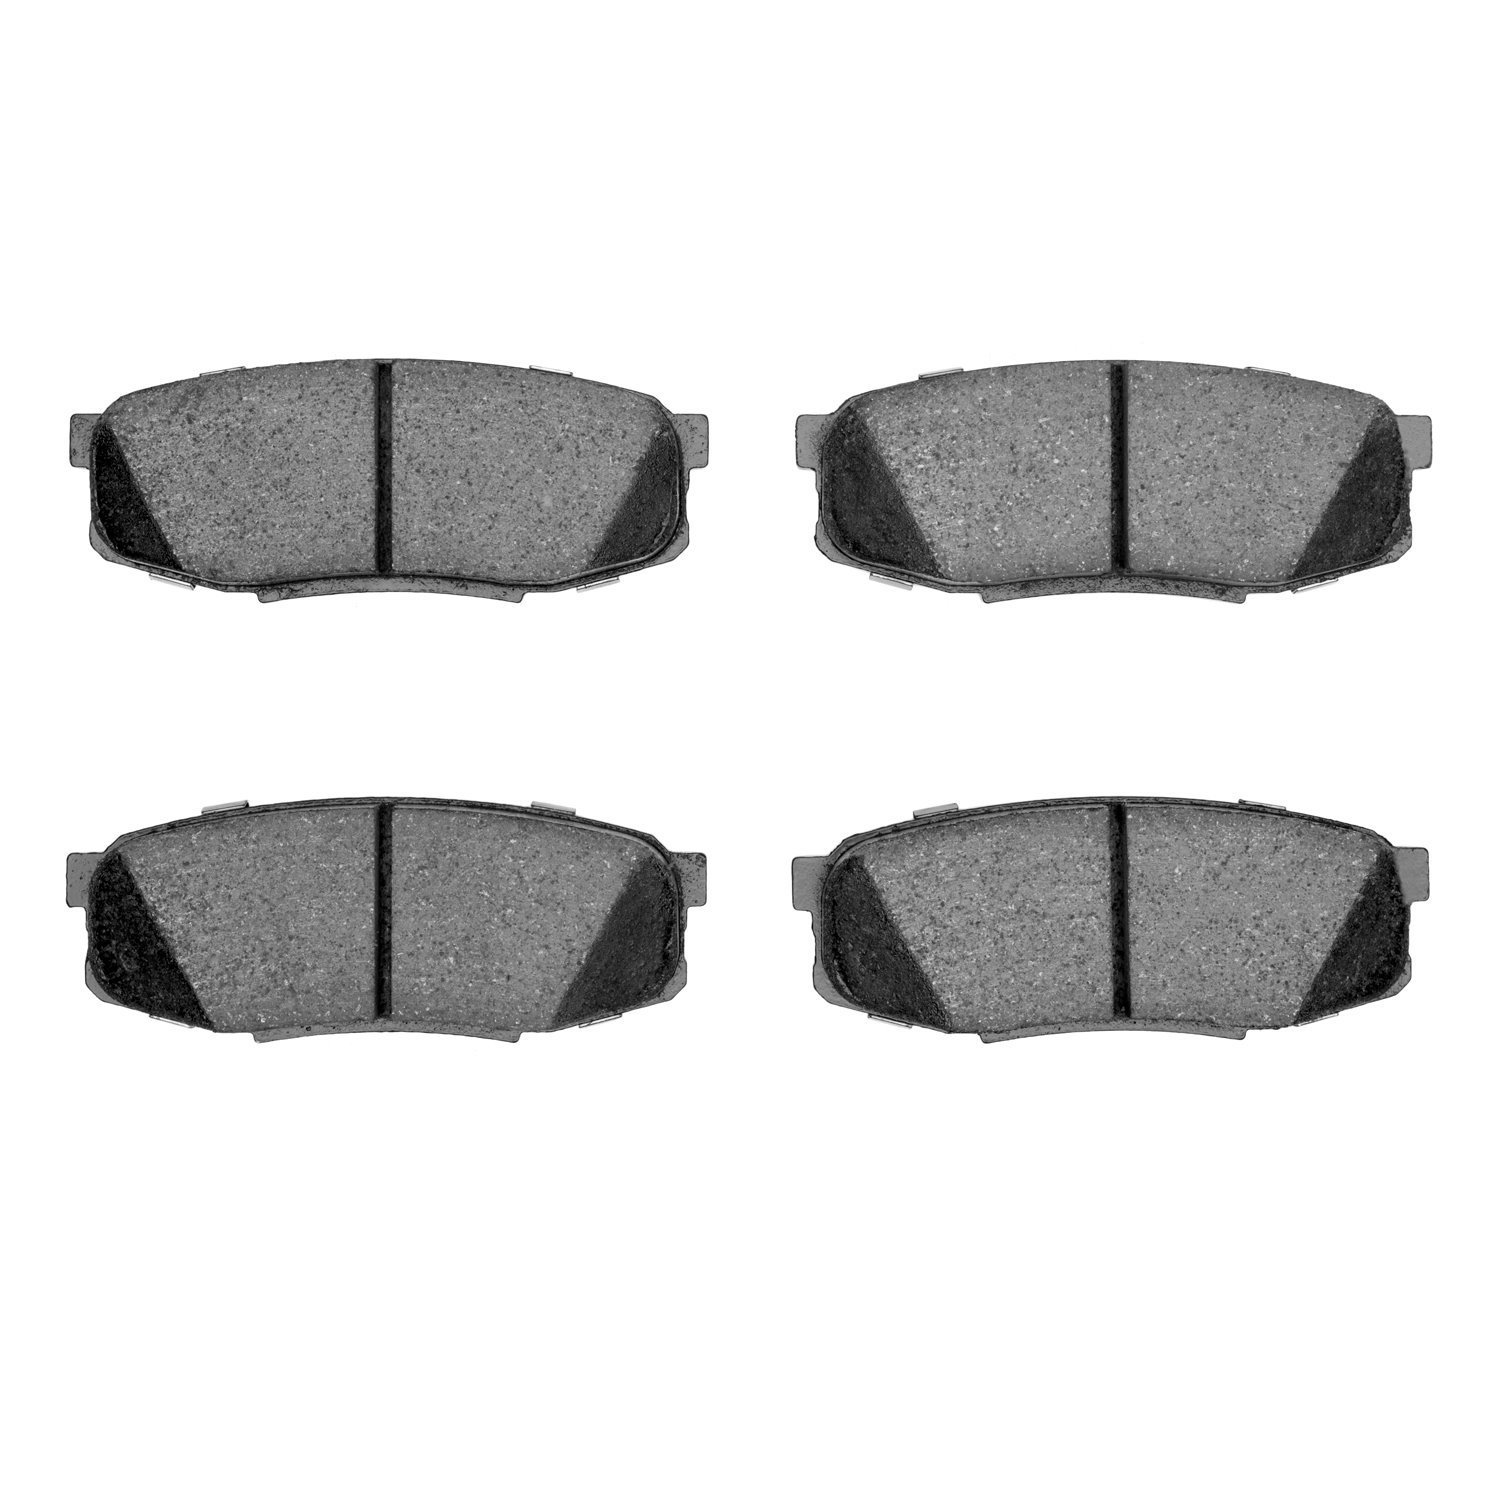 1551-1304-00 5000 Advanced Ceramic Brake Pads, Fits Select Lexus/Toyota/Scion, Position: Rear